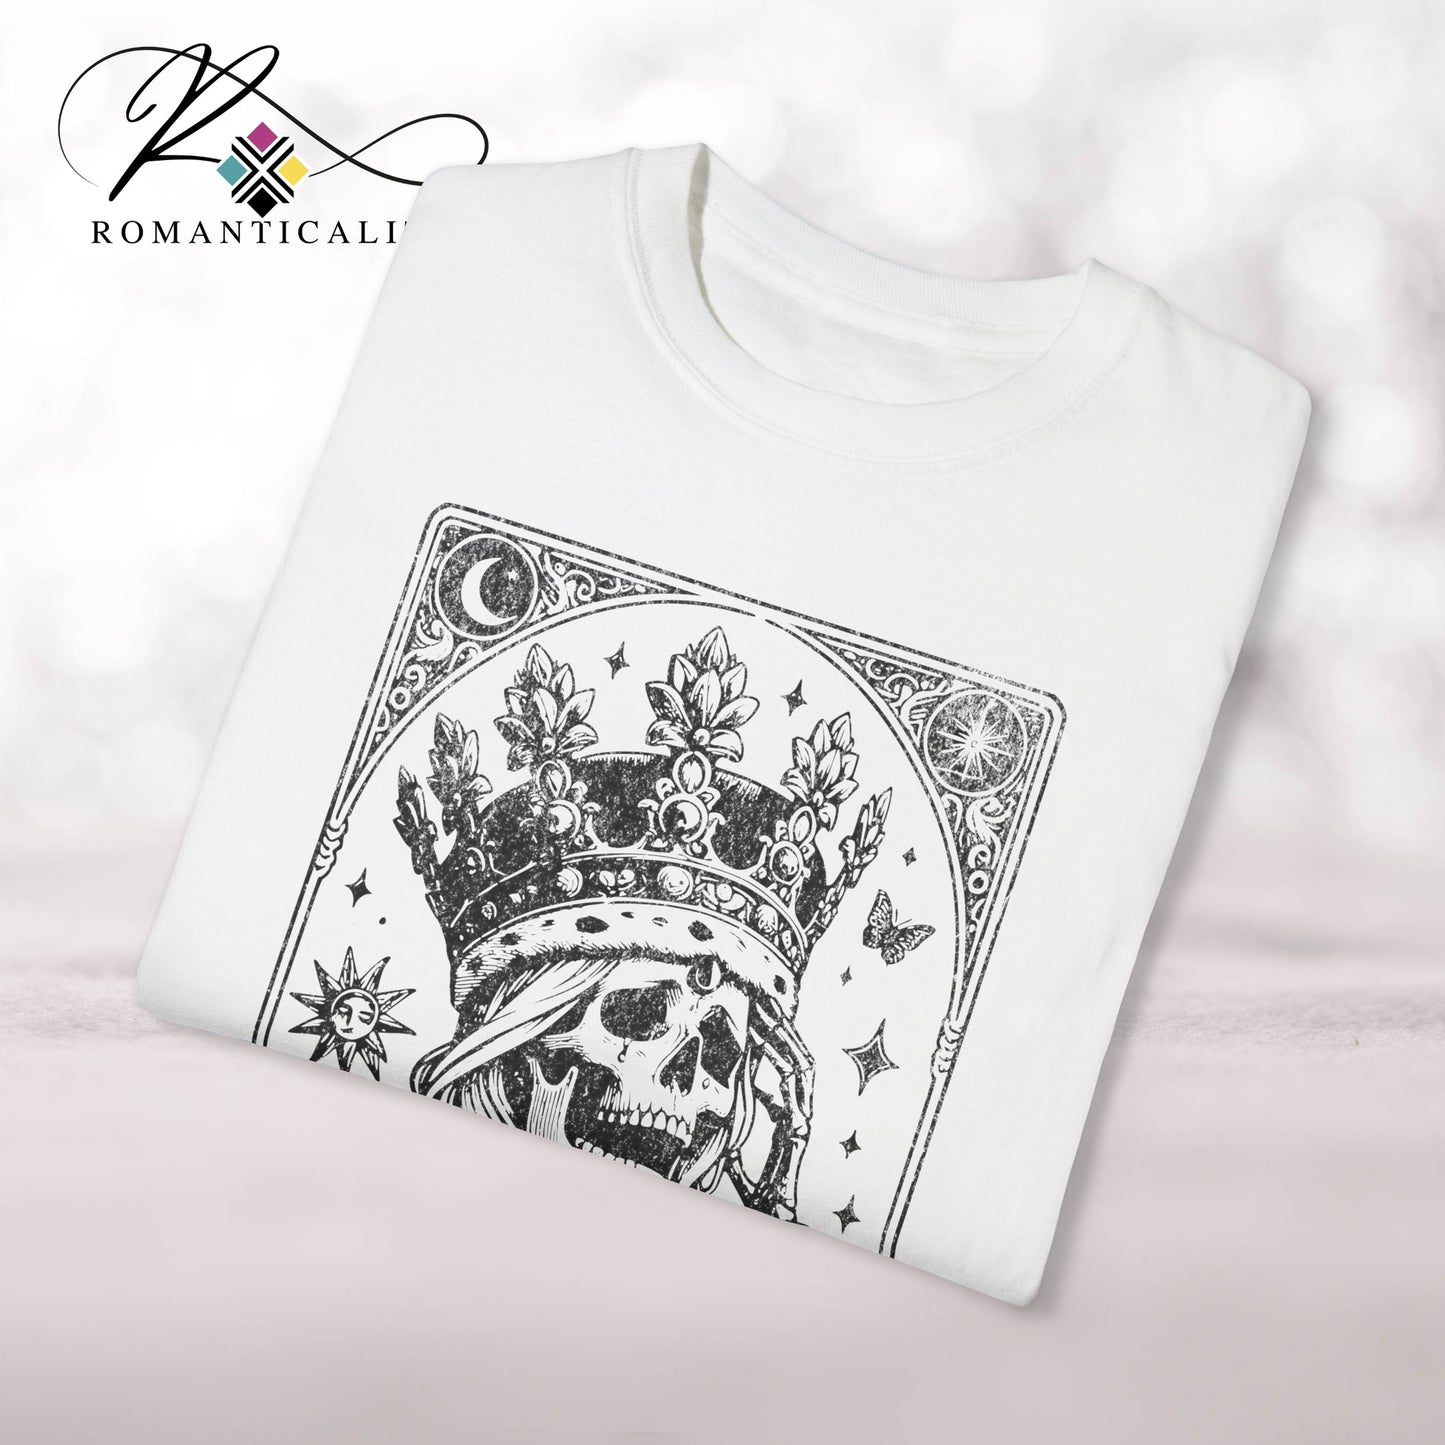 Drama Queen Sassy Graphic Tee-Sassy Tarot Card Graphic T-shirt-Women's Graphic T-Shirt-Women's Tarot Card Top